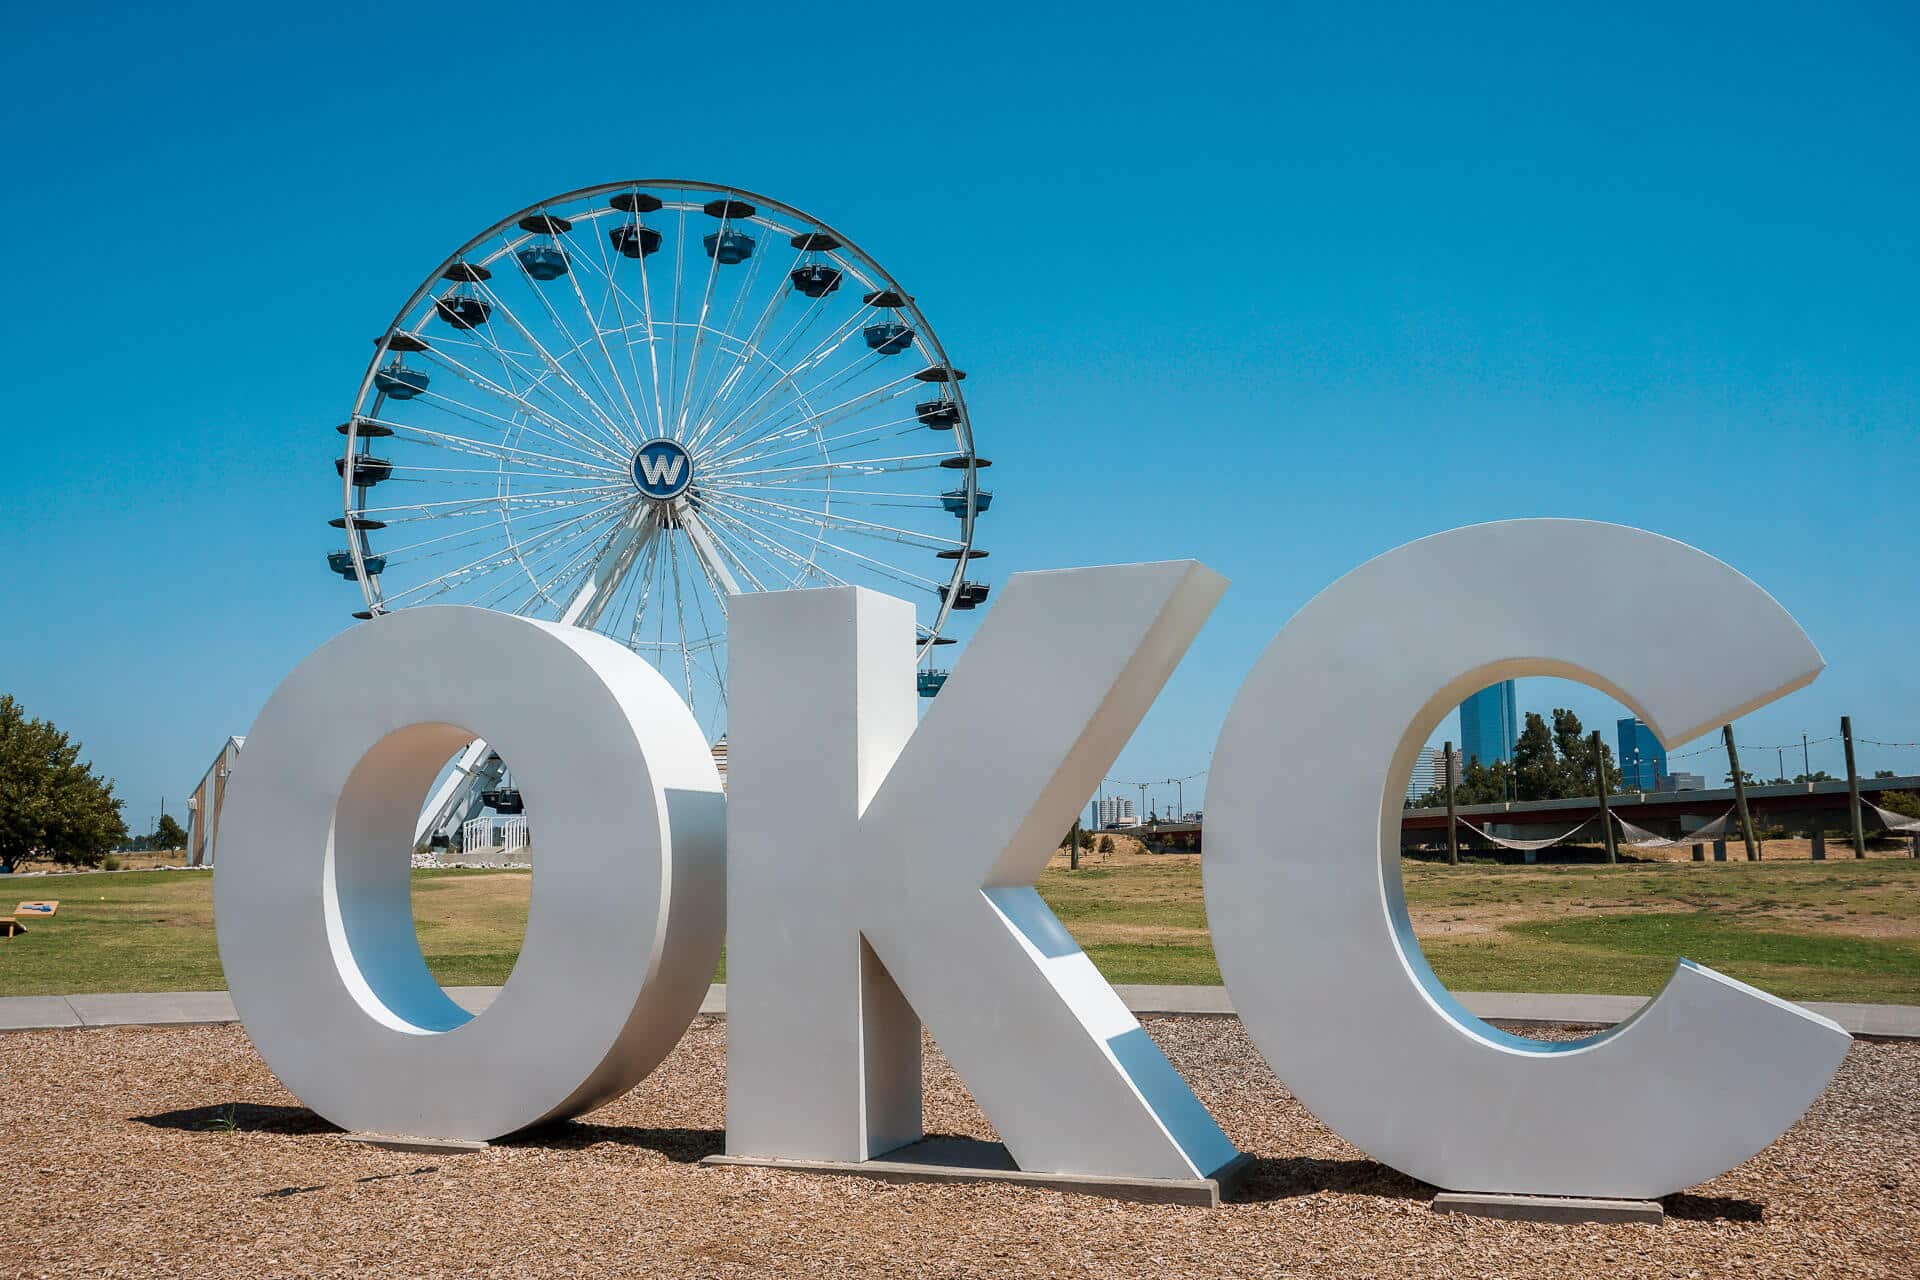 Oklahoma City Oklahoma Population